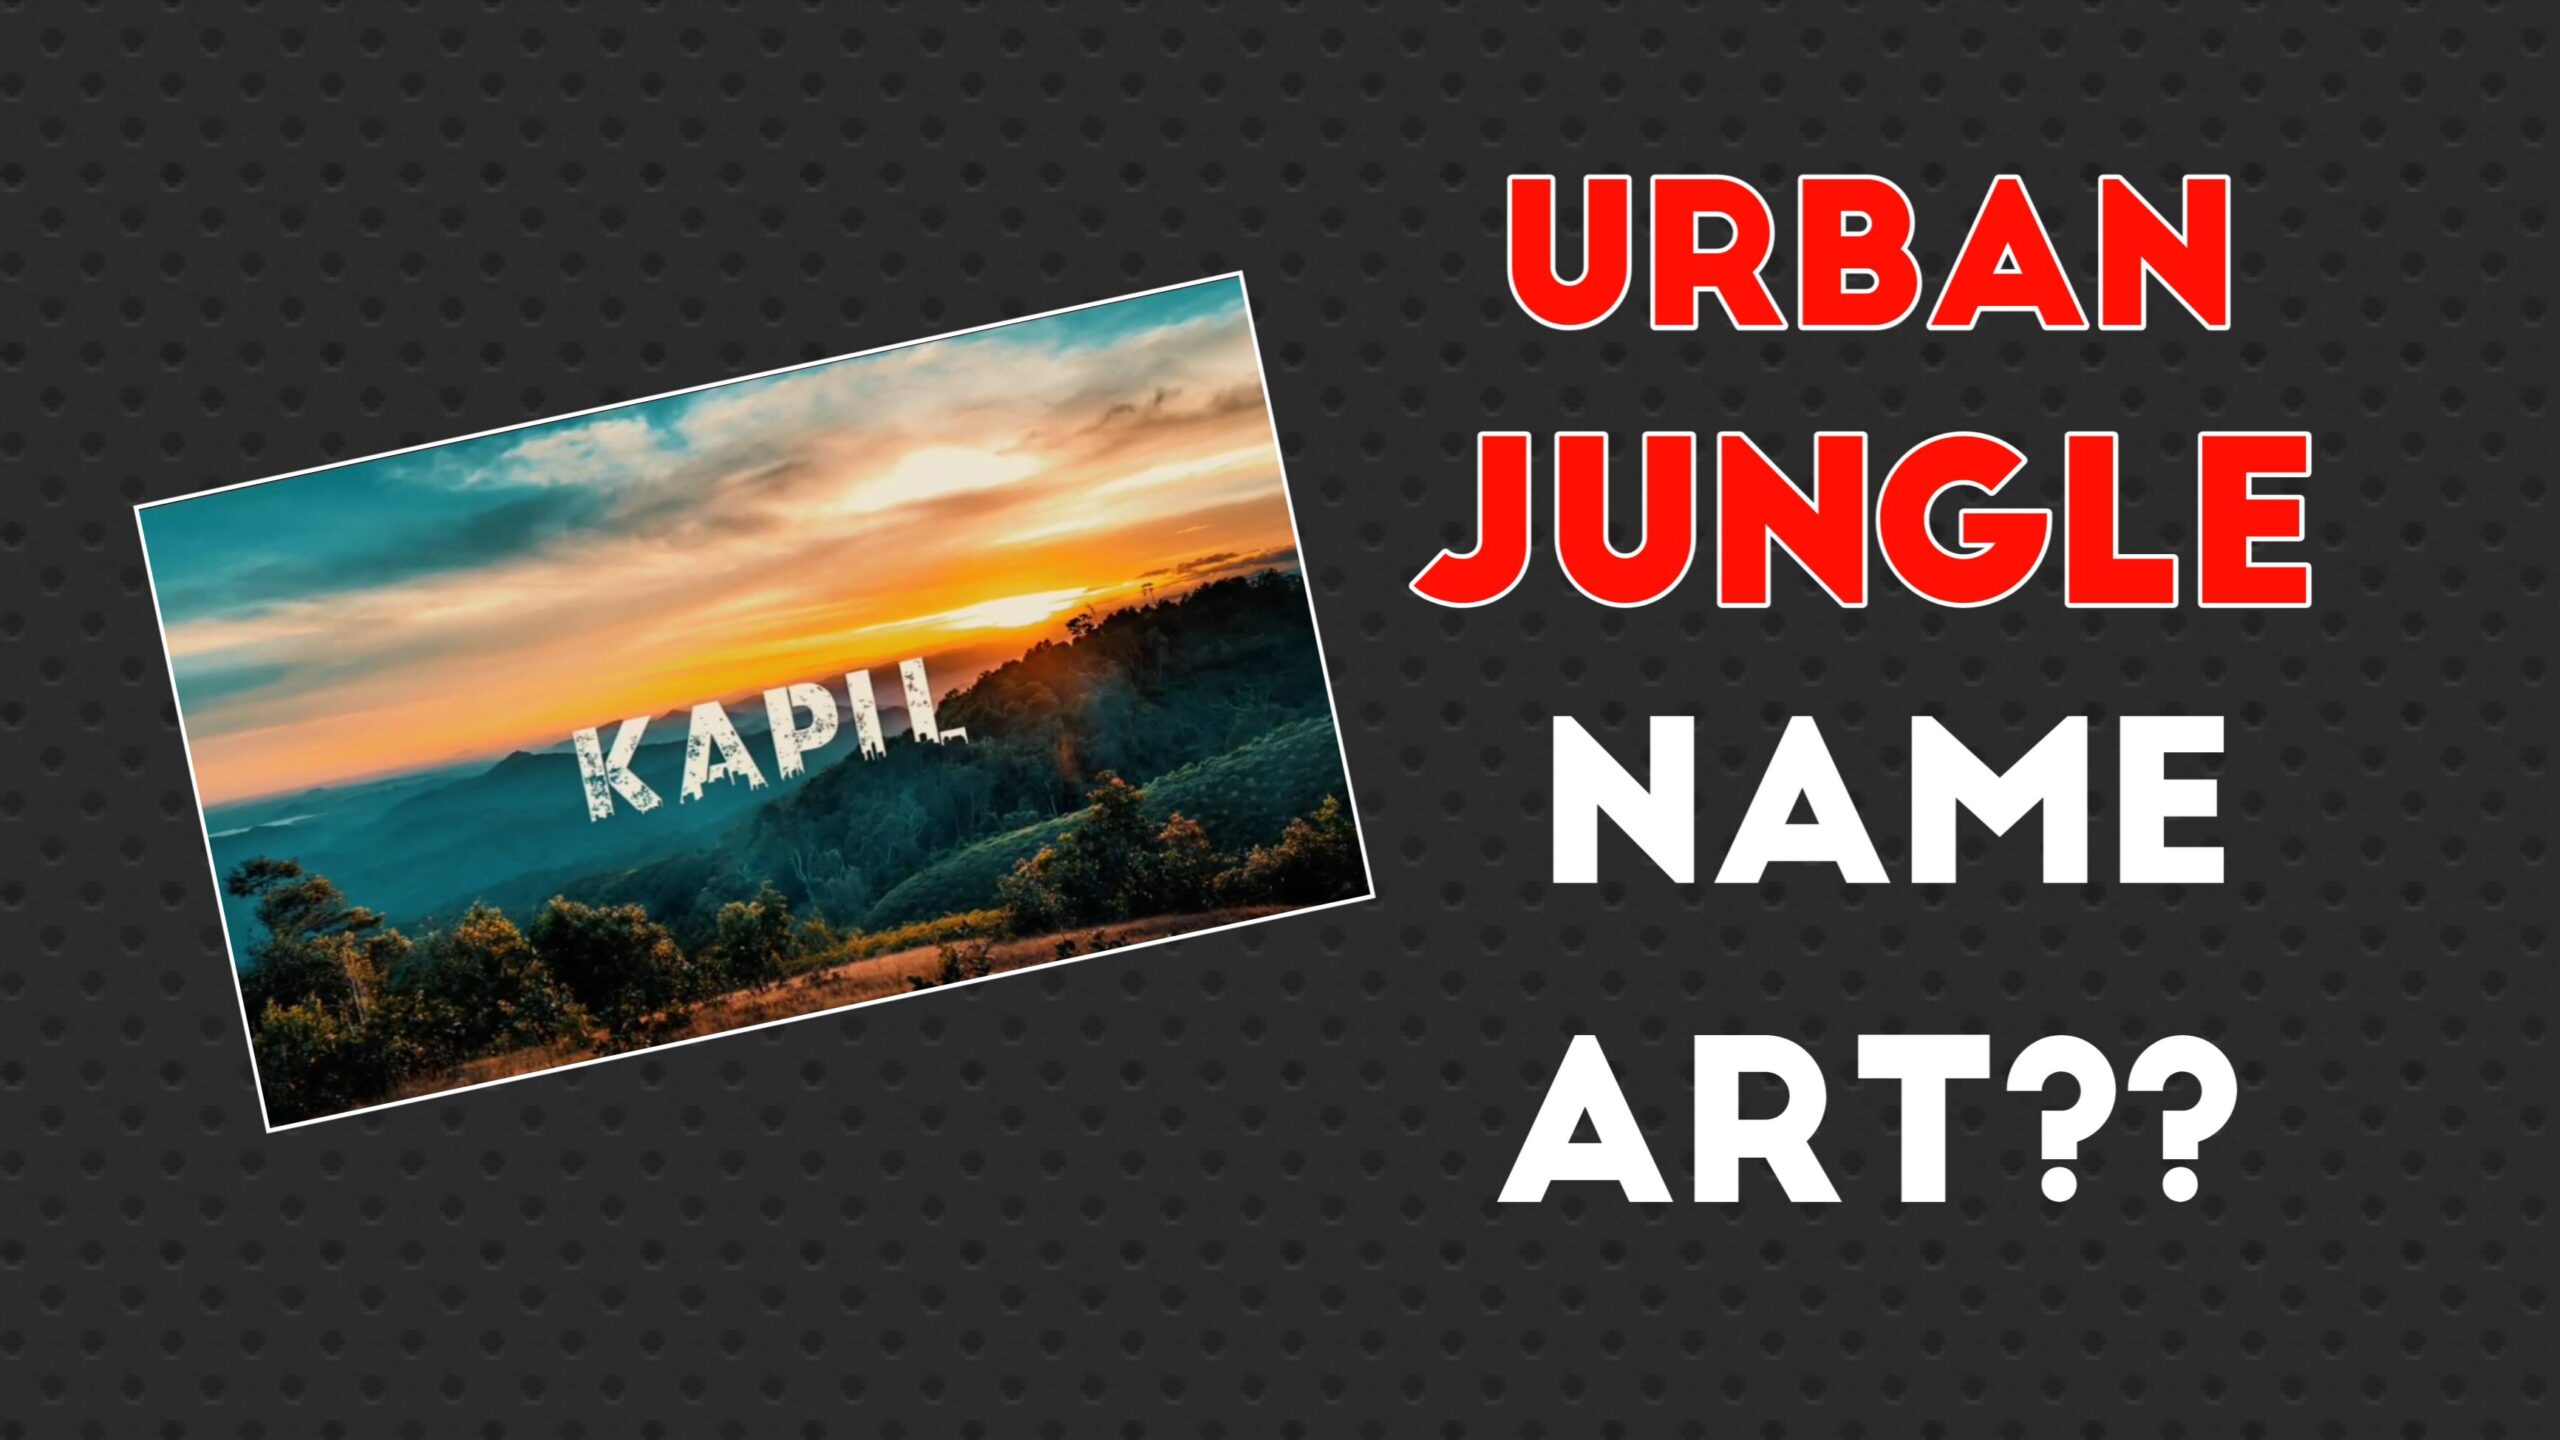 Urban jungle name art editing